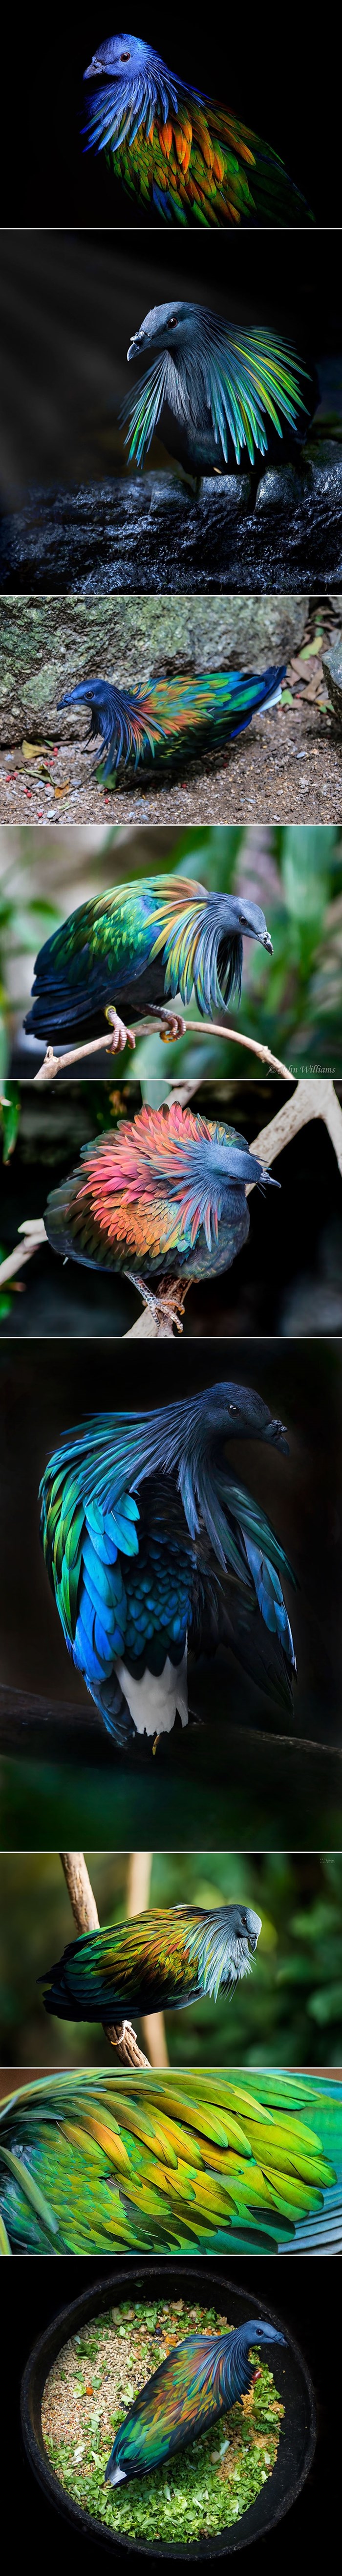 Ovj fantastični vatromet boja pripada najbližem rođaku izumrle ptice dodo